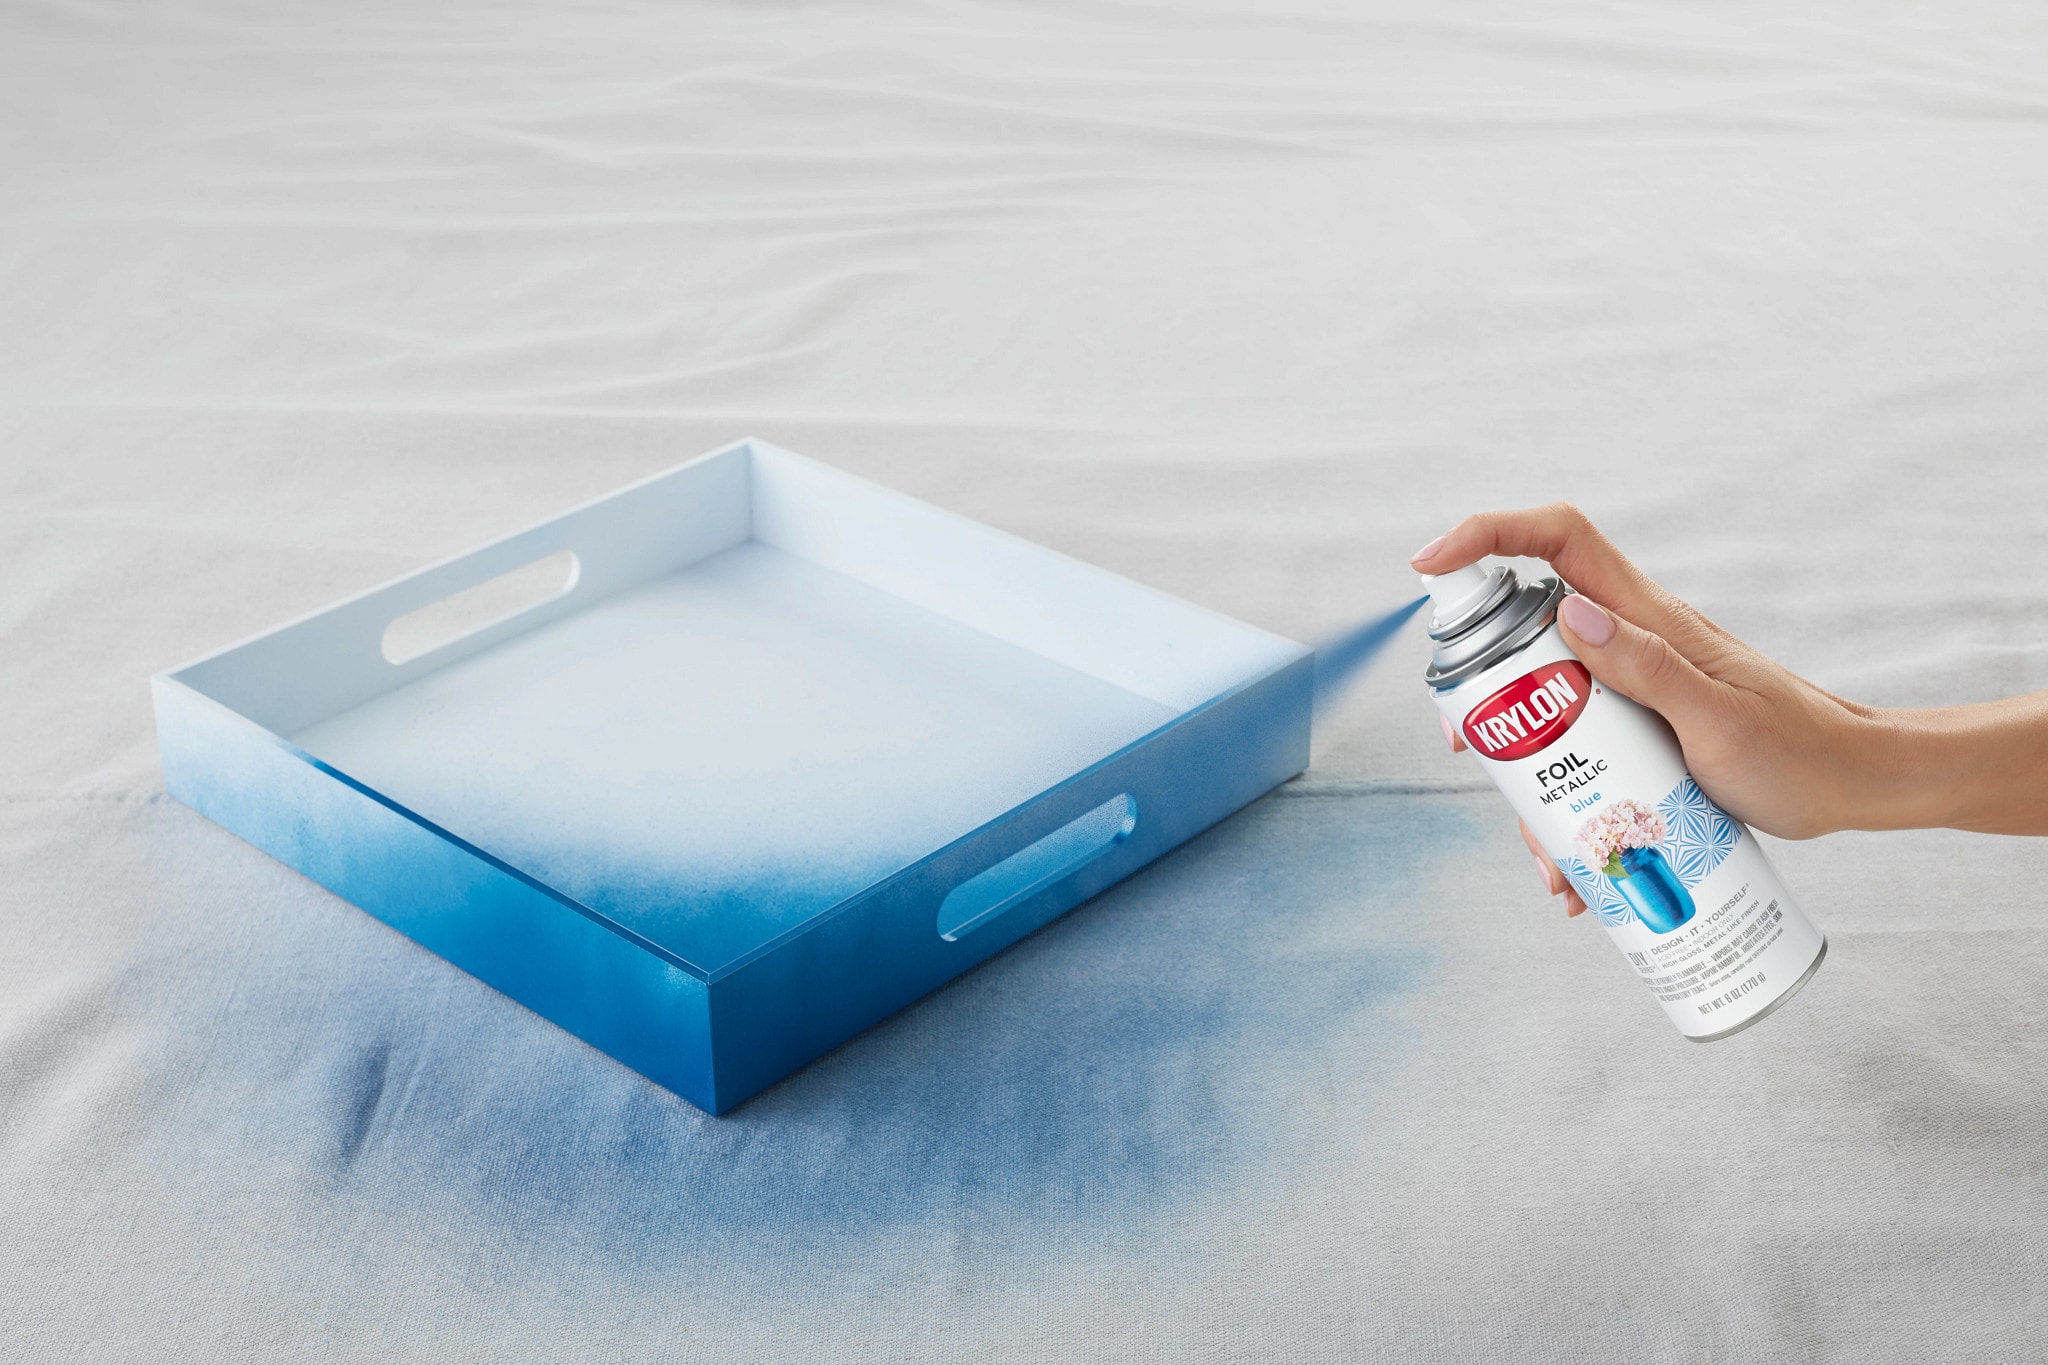 Krylon ColorMaxx 12 Oz. Gloss Spray Paint, Peekaboo Blue - Bliffert Lumber  and Hardware